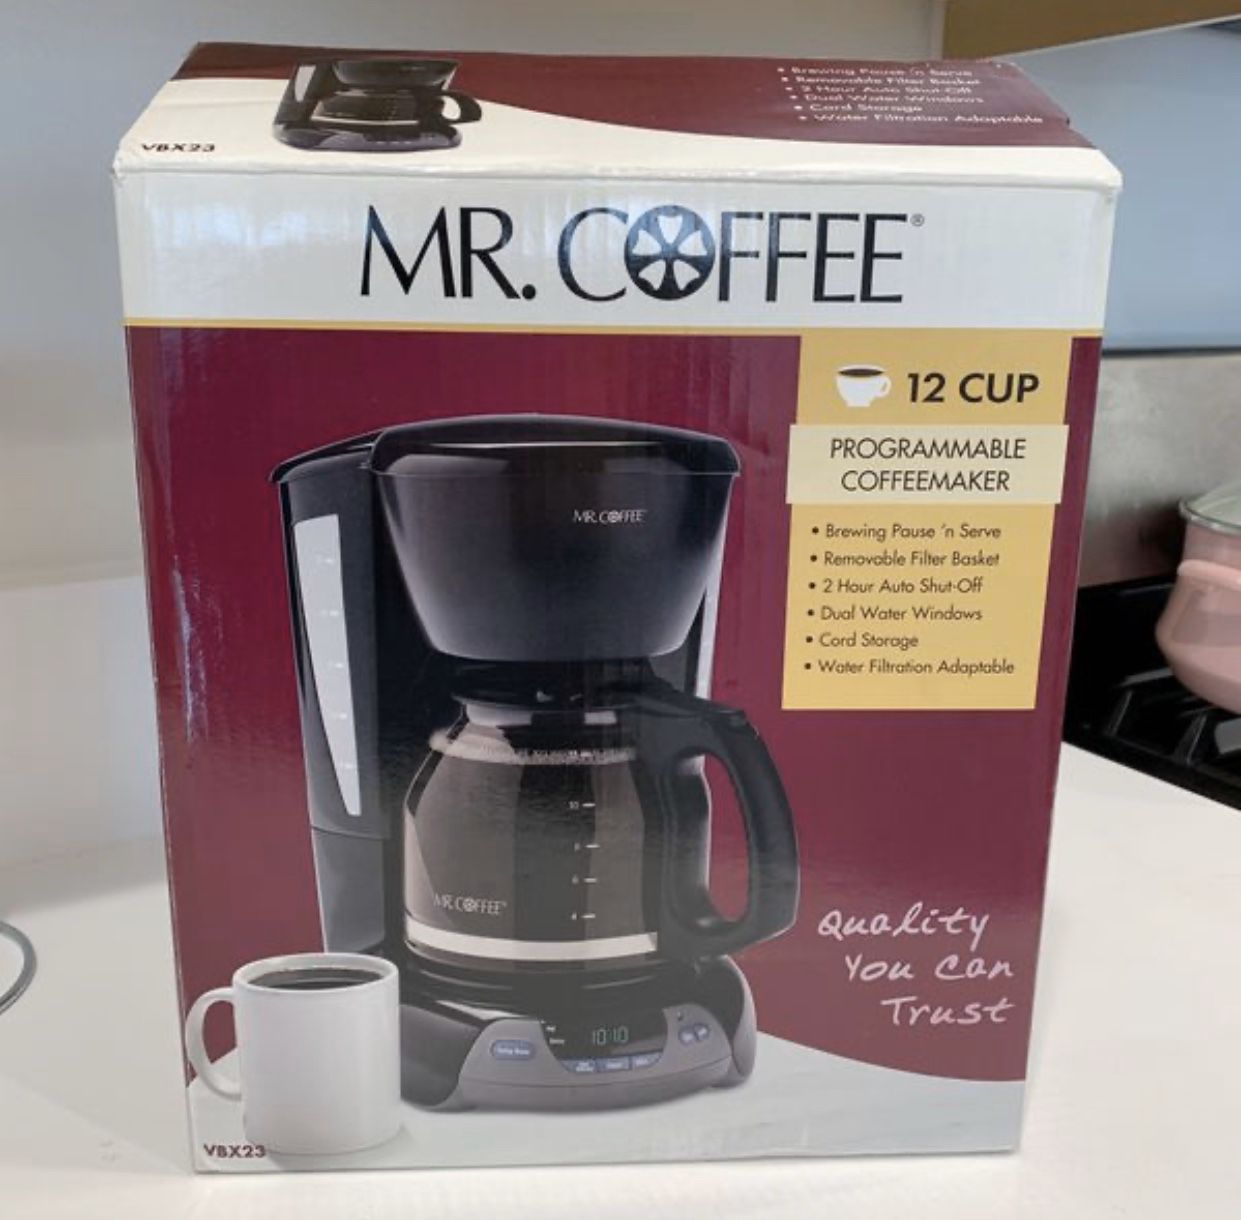 Mr.Coffee 12 cup programmable coffeemaker